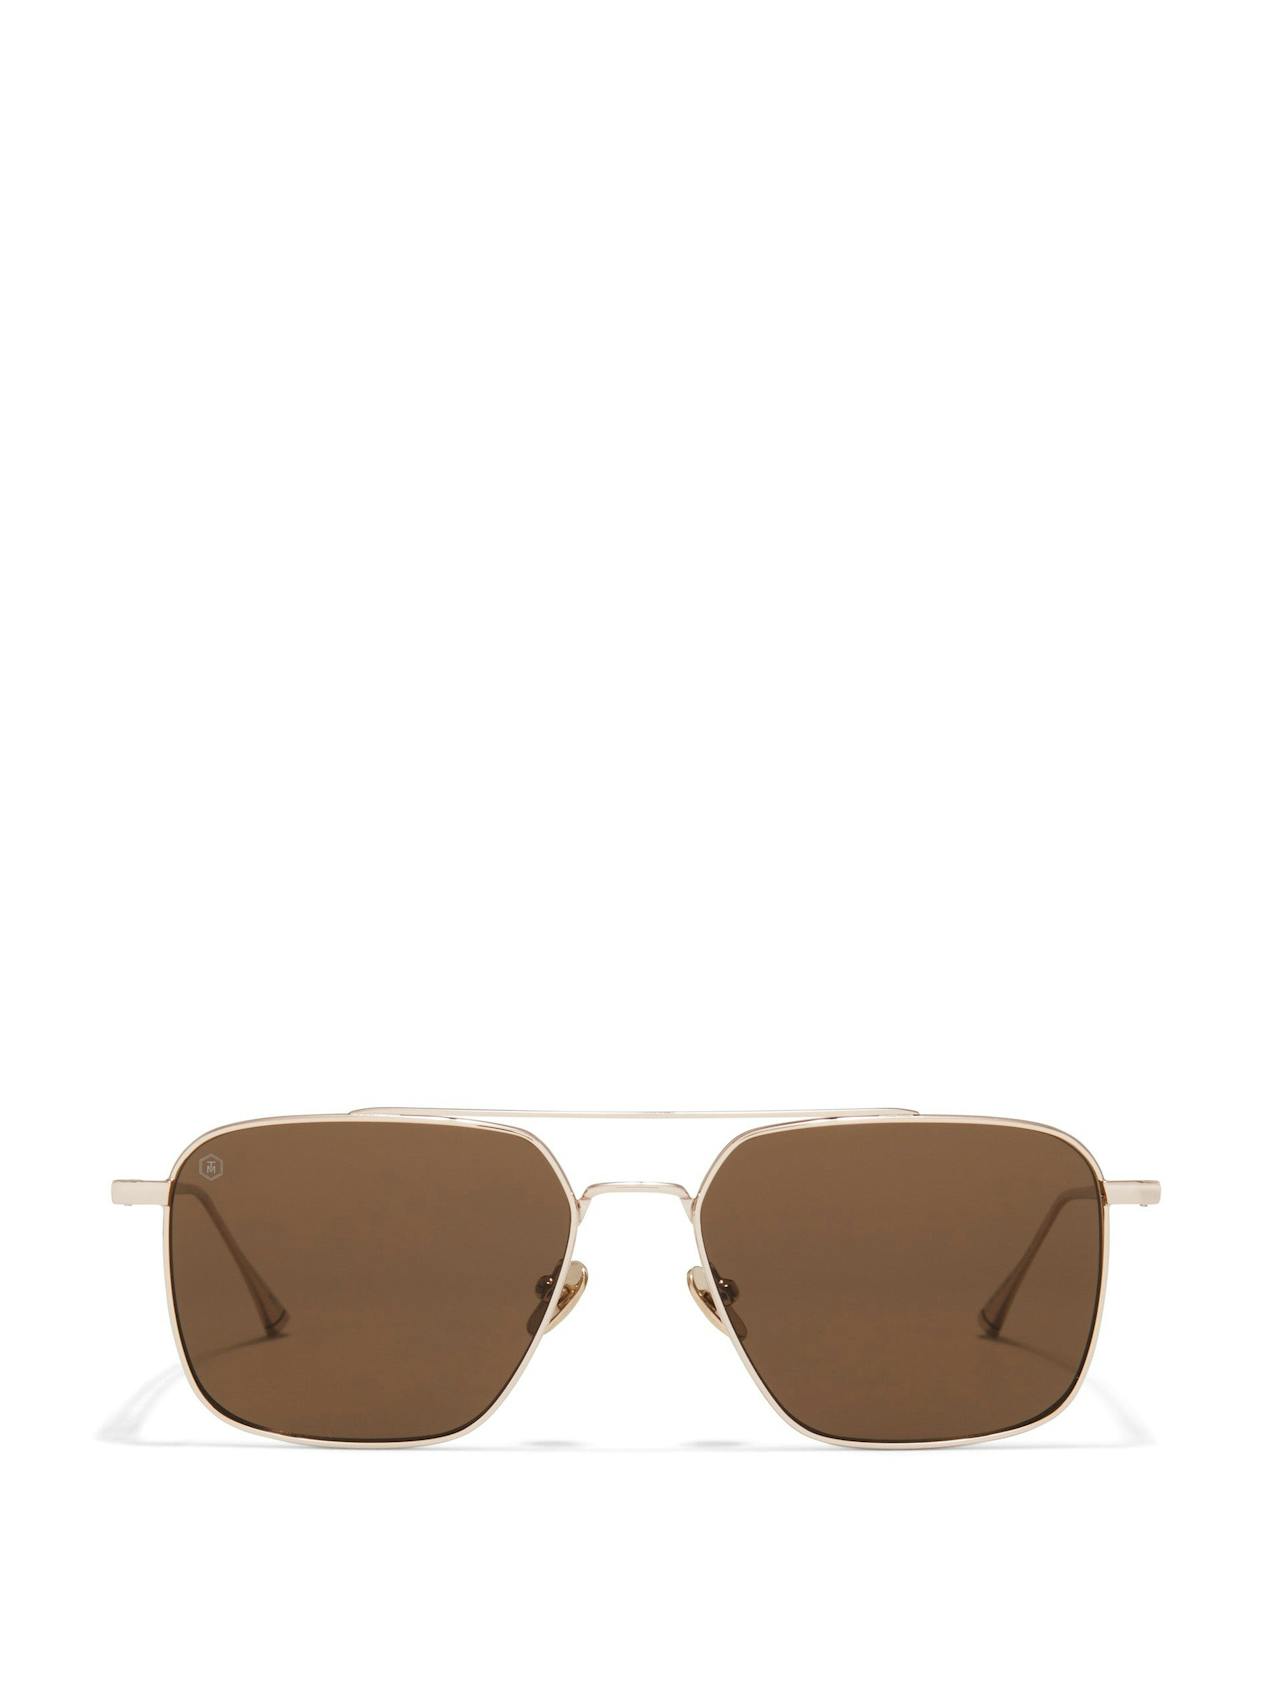 Draycott sunglasses